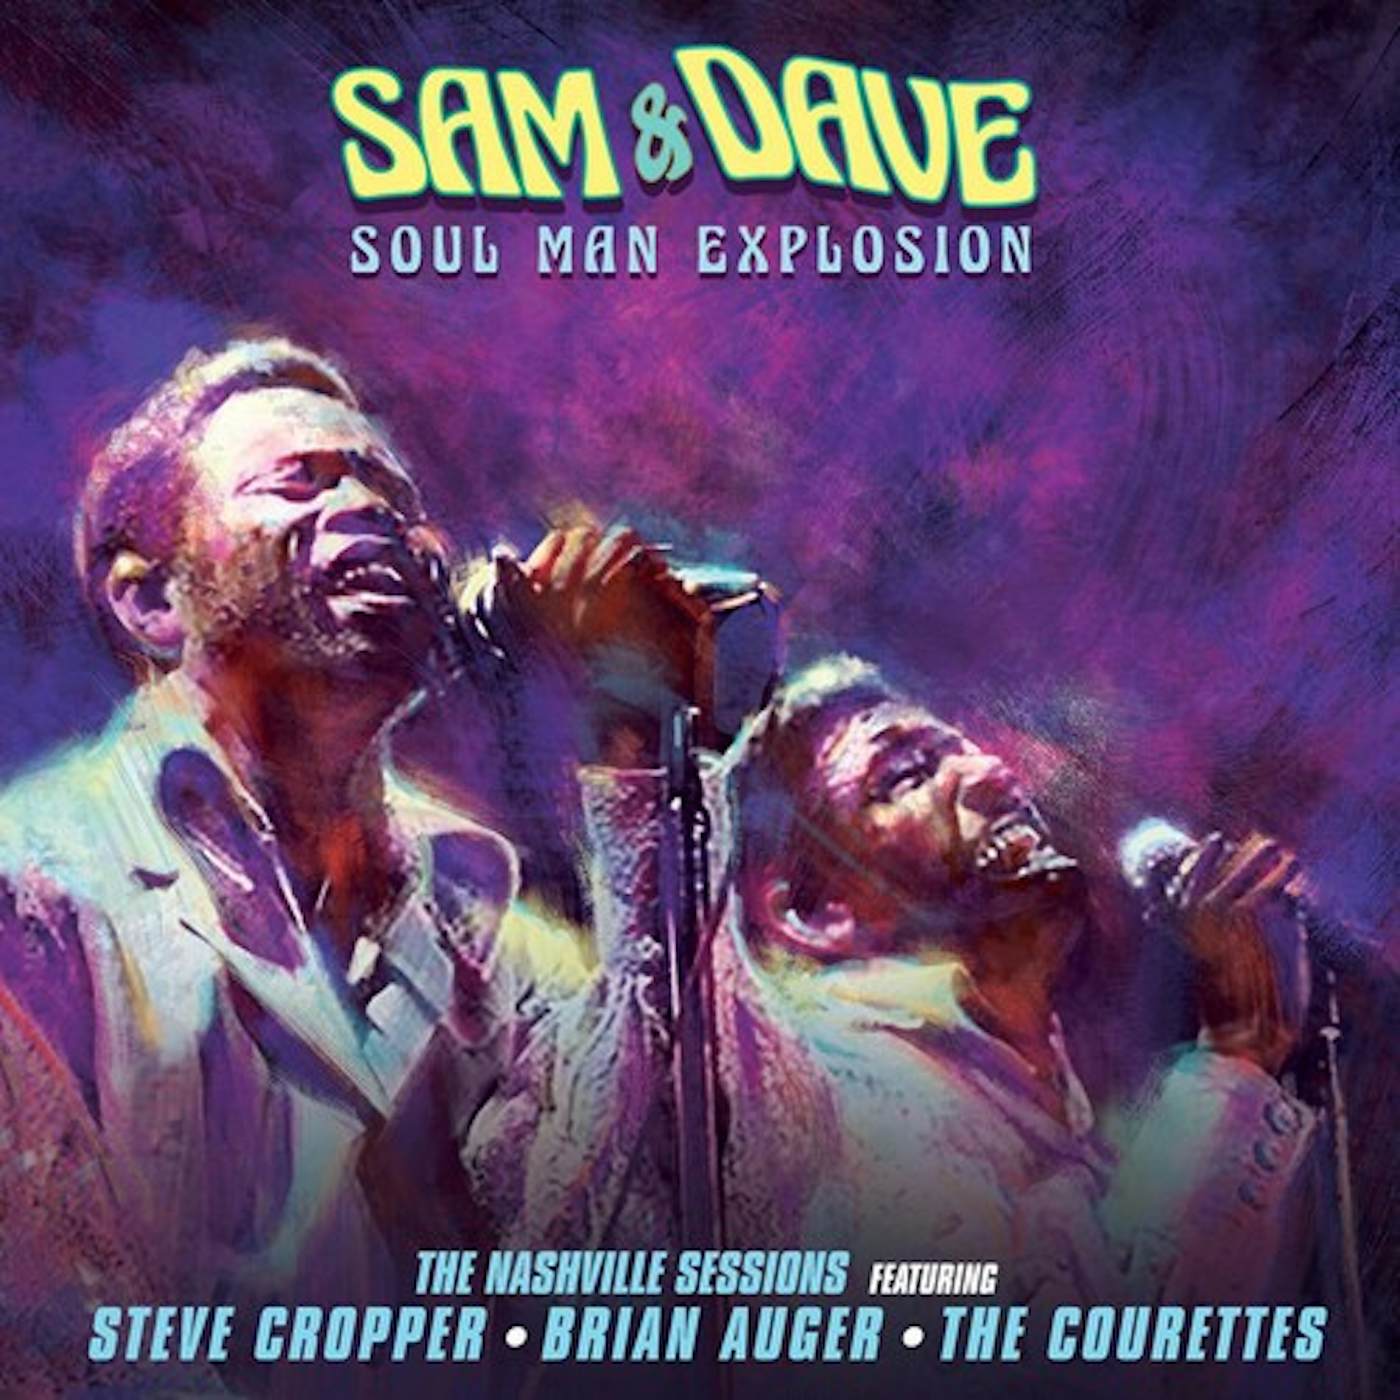 Sam & Dave SOUL MAN EXPLOSION CD